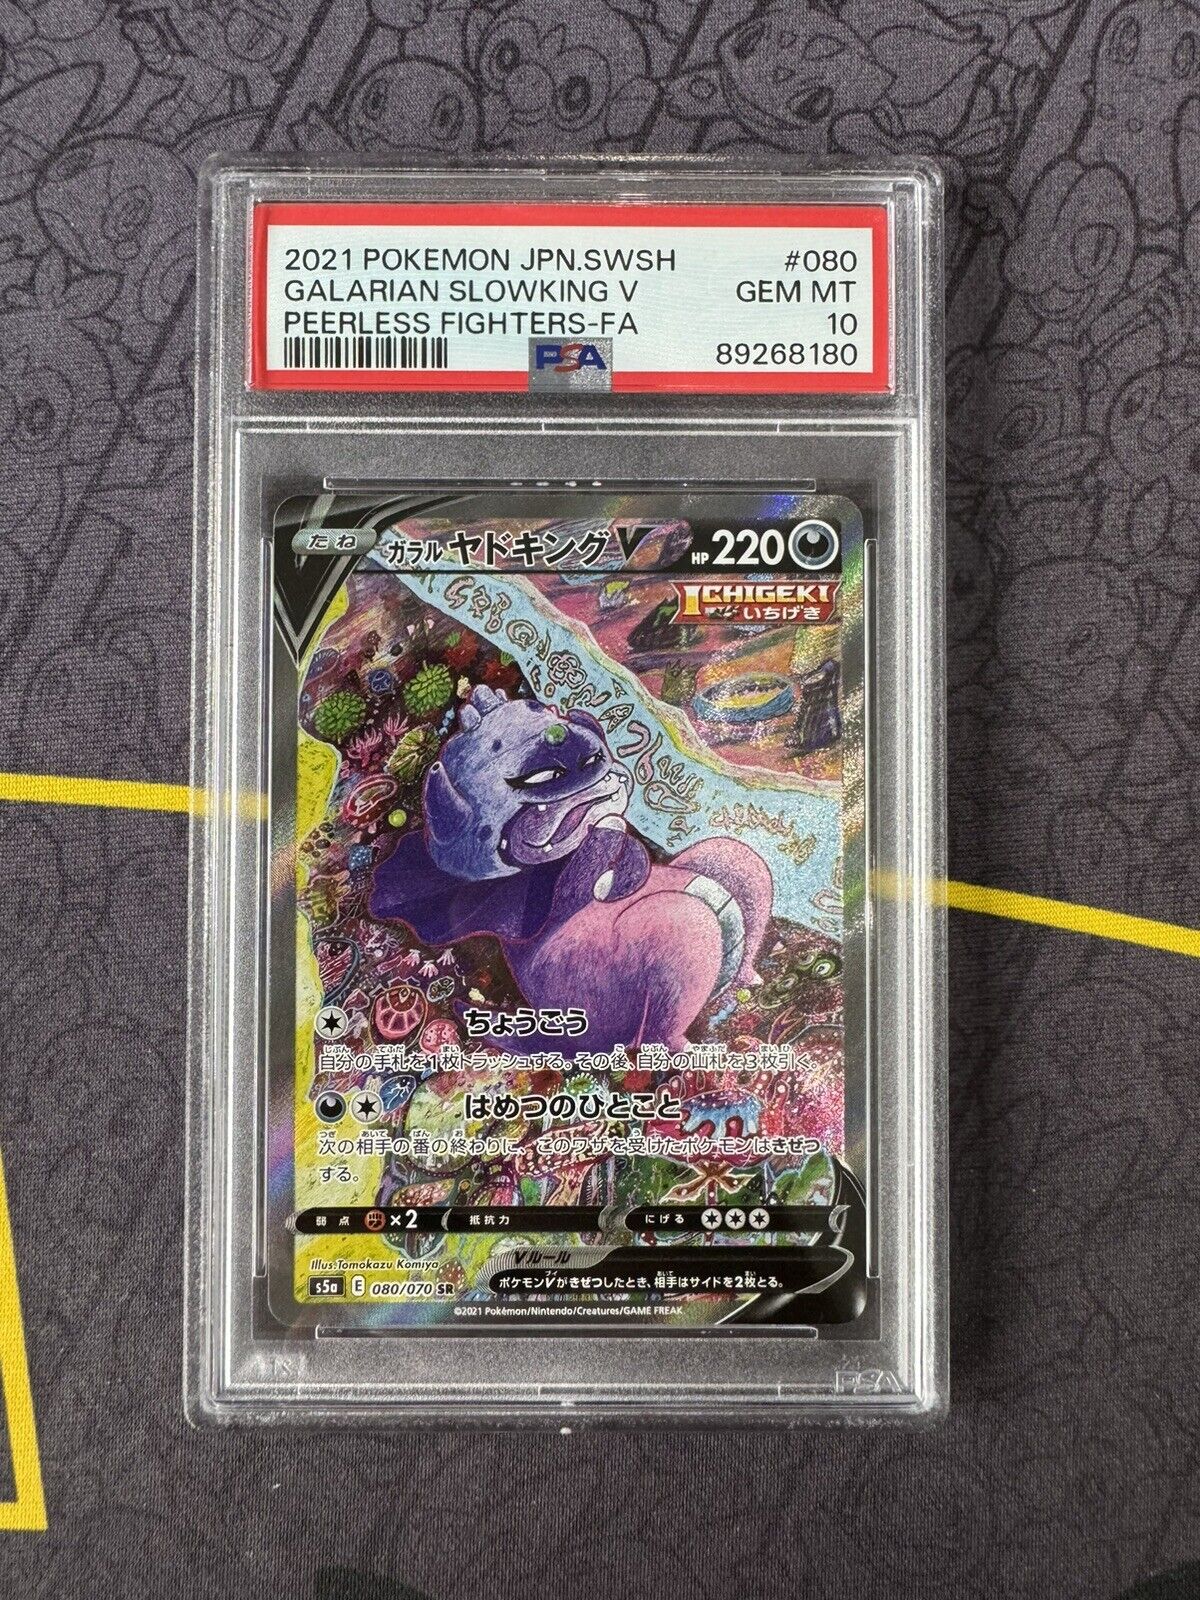 PSA 10 Galarian Slowking v Sr 080/070 Peerless Fighters Japanese Pokemon Card